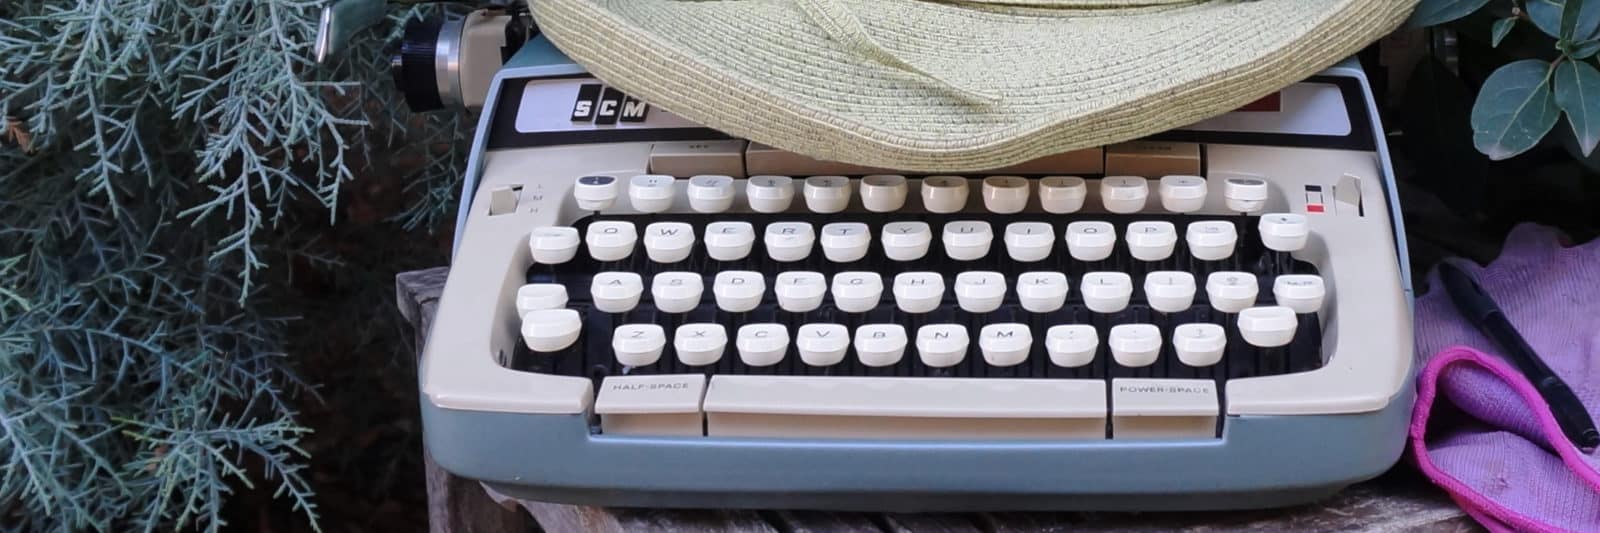 garden writing typewriter in evergreens